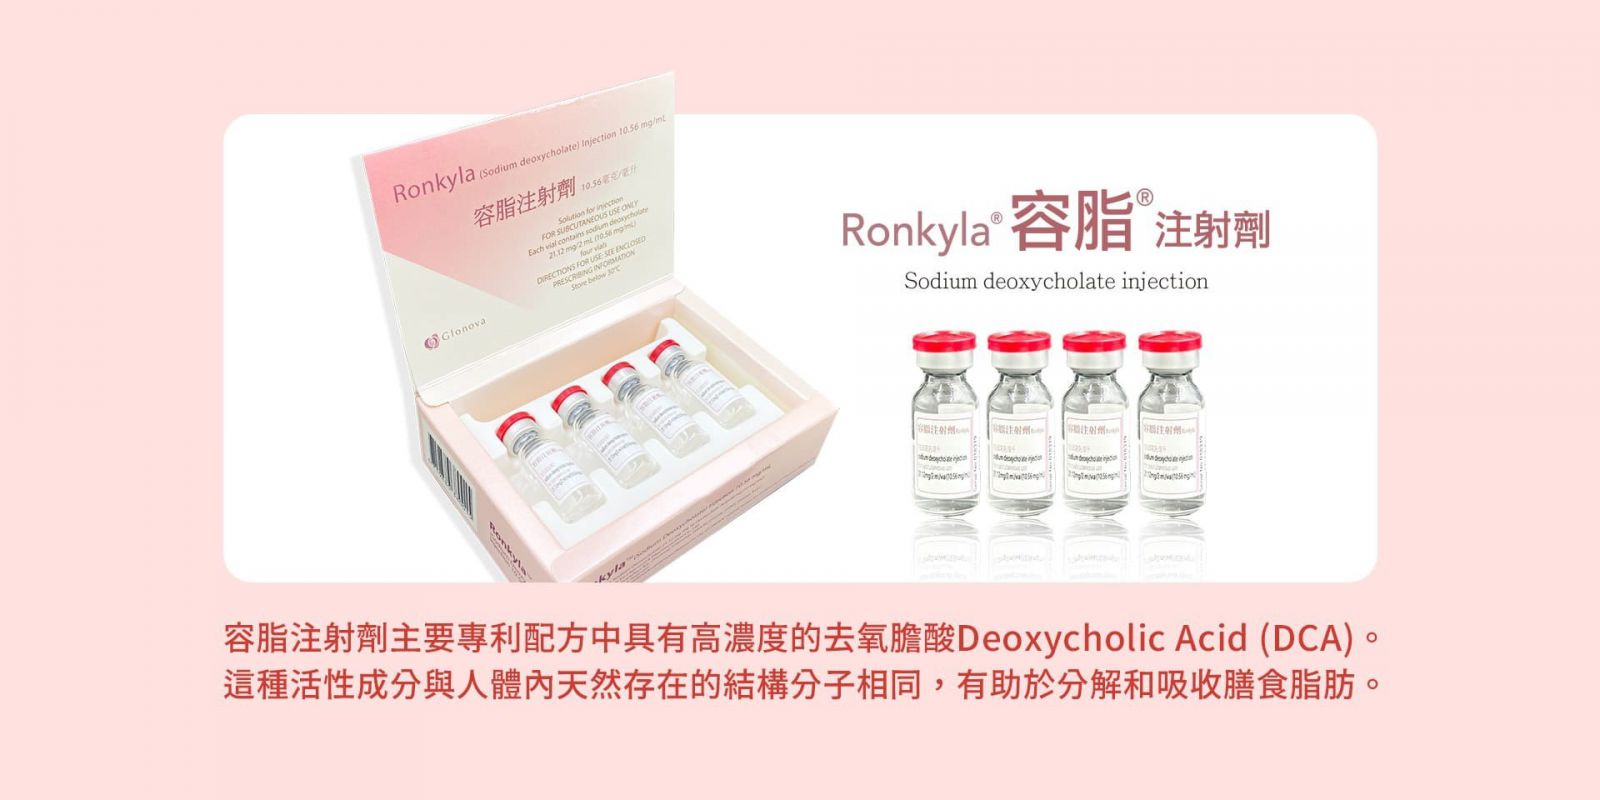 Ronkyla(Sodium deoxycholate) Injection 容脂注射劑  容脂注射劑主要專利配方中具有高濃度的去氧膽酸Deoxycholic Acid (DCA)。 這種活性成分與人體內天然存在的結構分子相同,有助於分解和吸收膳食脂肪。